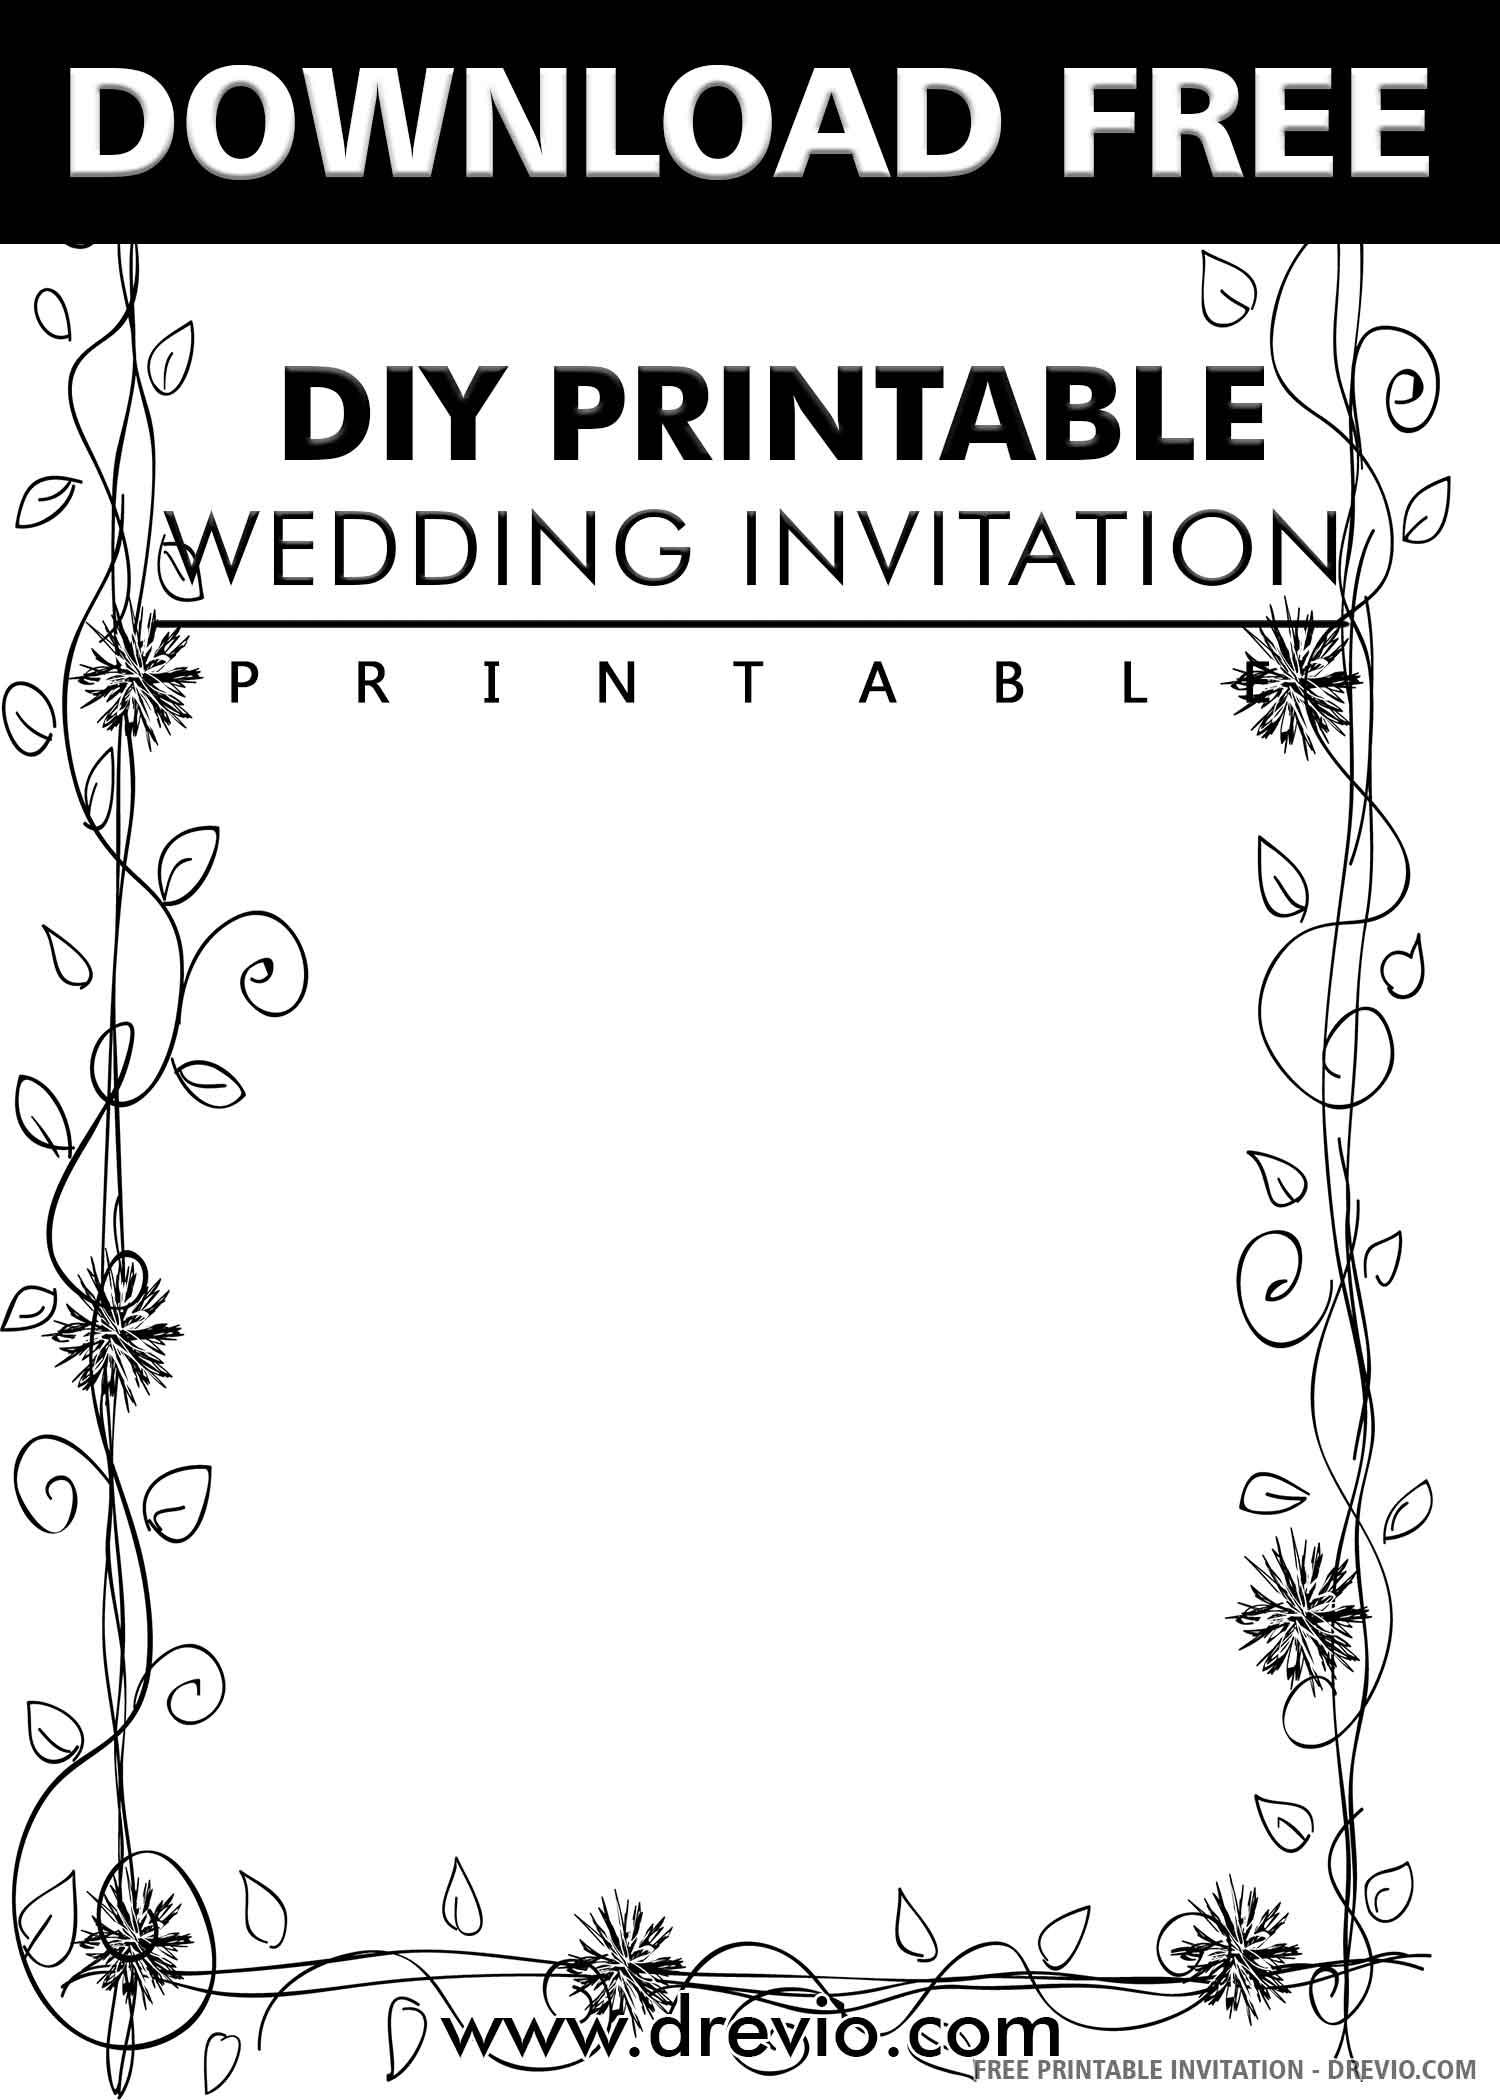 (FREE PRINTABLE) DIY Printable Wedding Invitation Templates